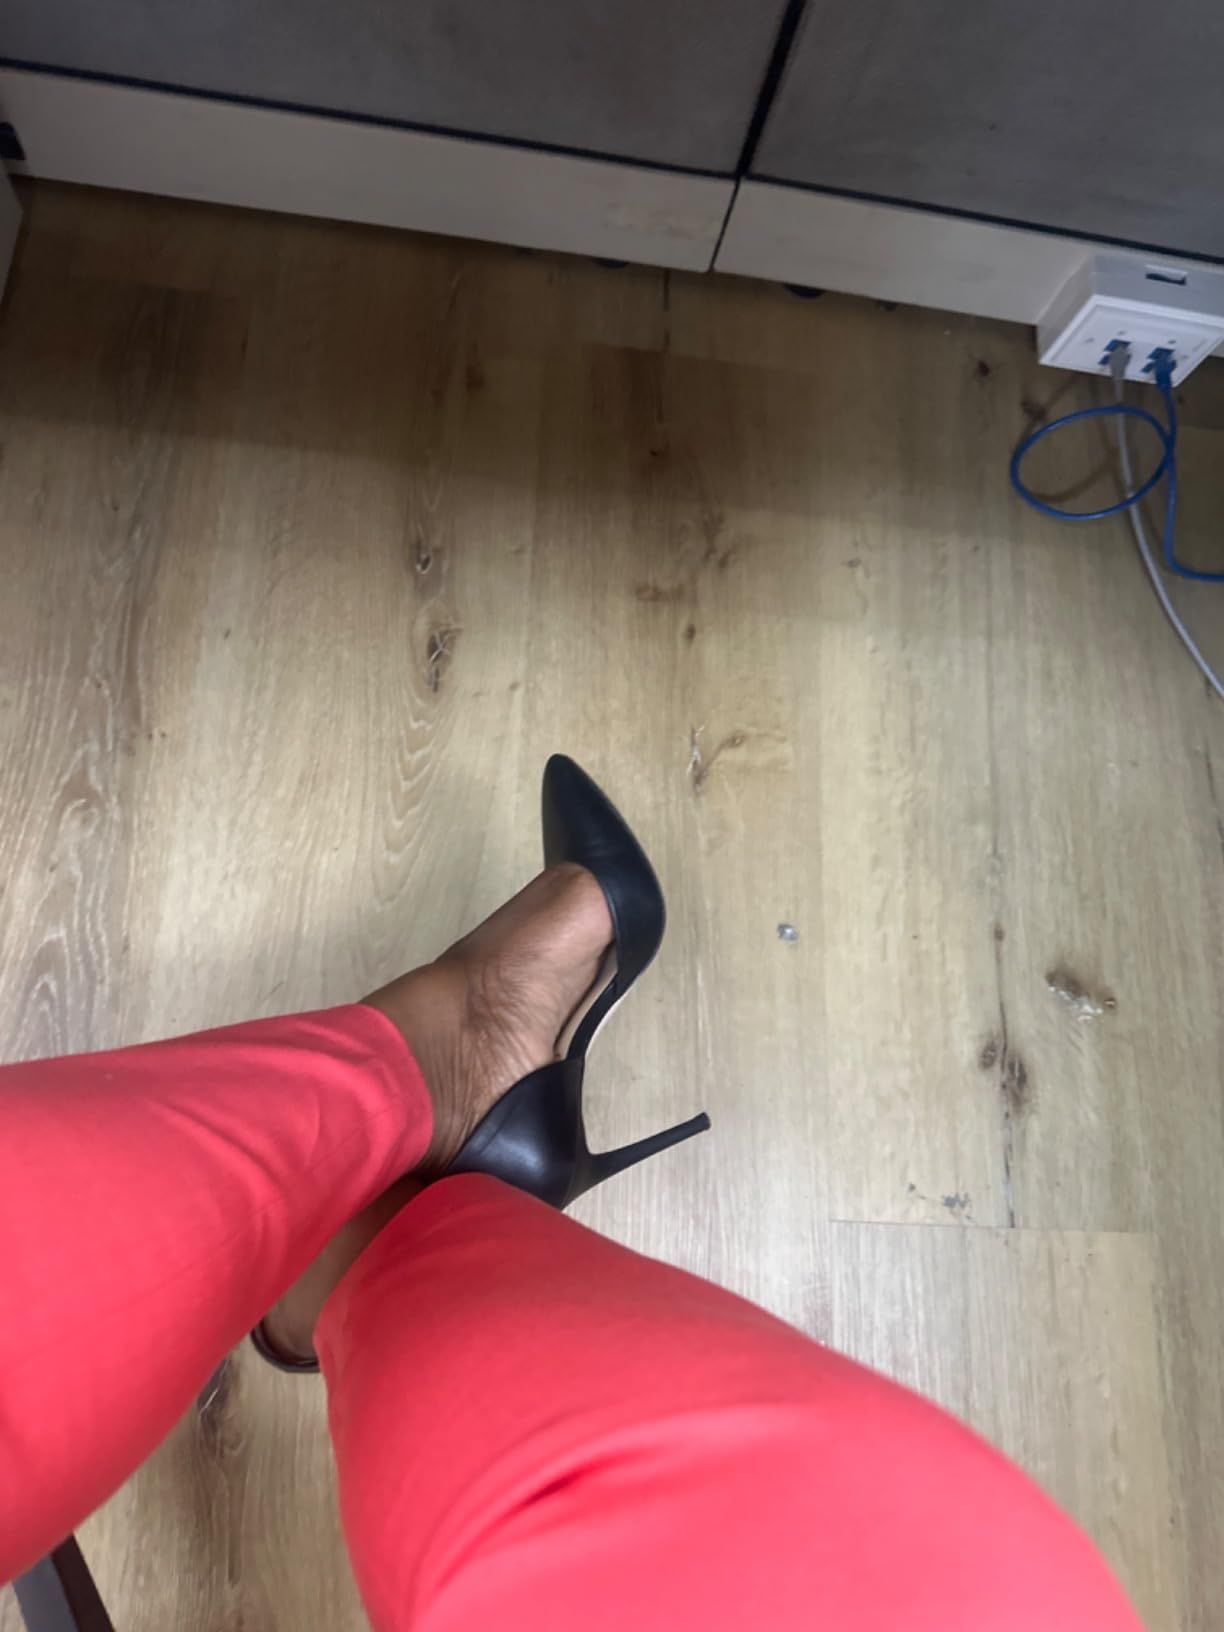 Jessica Simpson Women's Prizma Pointed Toe D'Orsay Heels Pumps | Amazon (US)